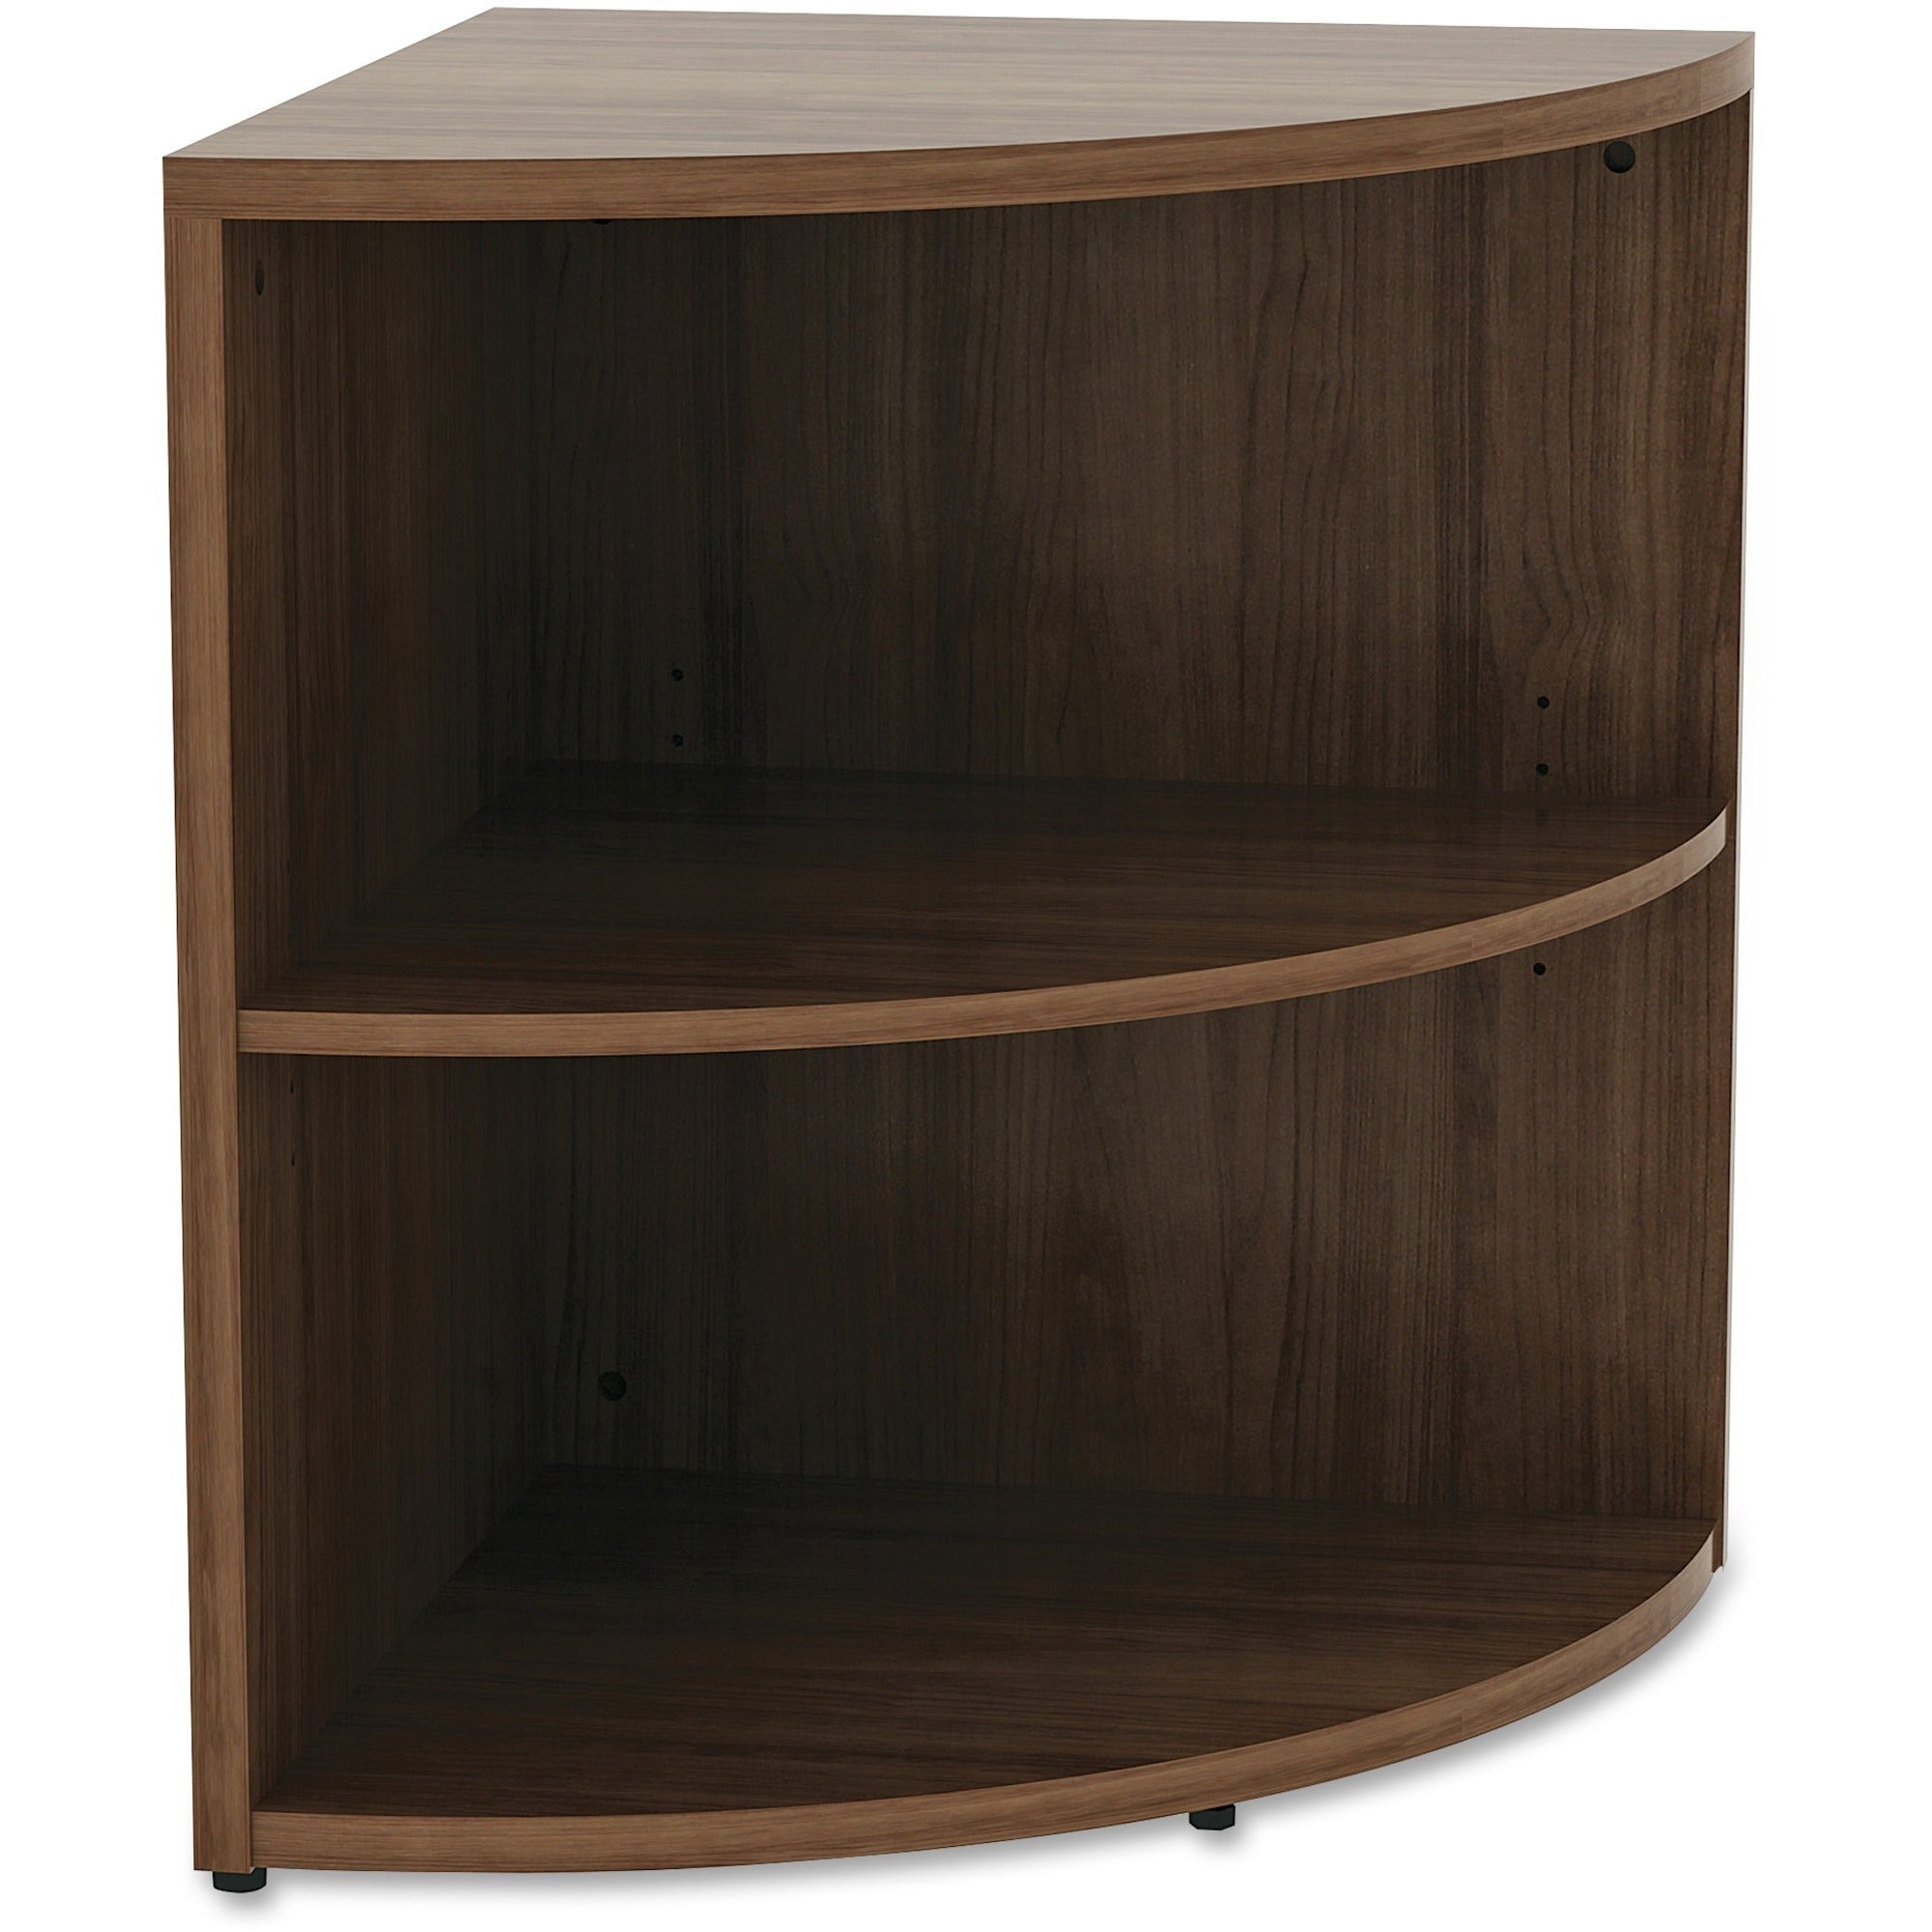 Lorell Essentials Series Desk End Corner Bookcase - 23.6" Height x 29.5" Width30.7" Length%Floor - Walnut - Laminate, Polyvinyl Chloride (PVC) - 1 Each - 1